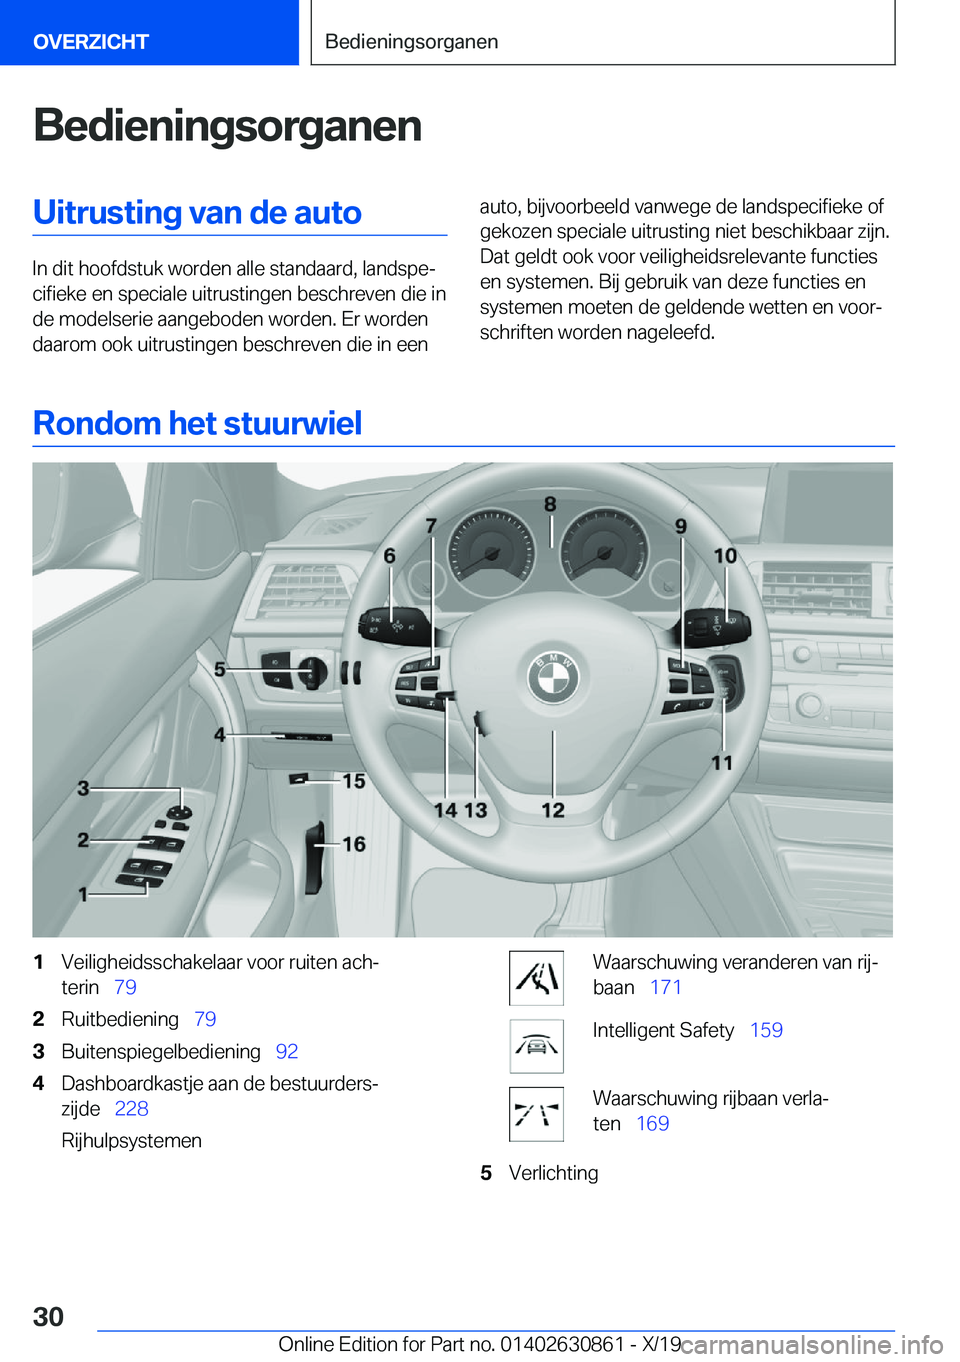 BMW 4 SERIES GRAN COUPE 2020  Instructieboekjes (in Dutch) �B�e�d�i�e�n�i�n�g�s�o�r�g�a�n�e�n�U�i�t�r�u�s�t�i�n�g��v�a�n��d�e��a�u�t�o
�I�n��d�i�t��h�o�o�f�d�s�t�u�k��w�o�r�d�e�n��a�l�l�e��s�t�a�n�d�a�a�r�d�,��l�a�n�d�s�p�ej�c�i�f�i�e�k�e��e�n��s�